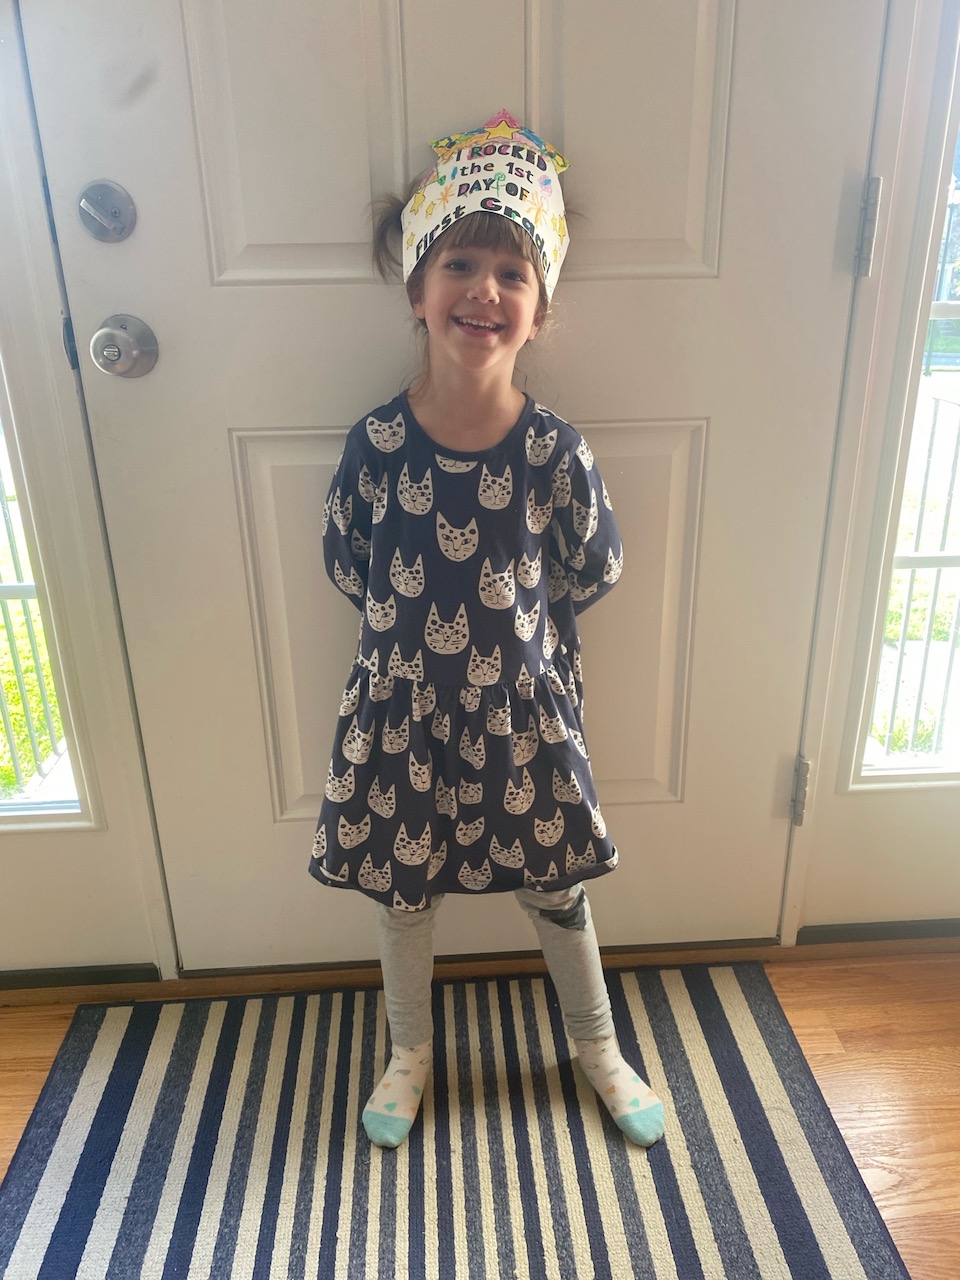 Lorelei wearing her first grade crown.